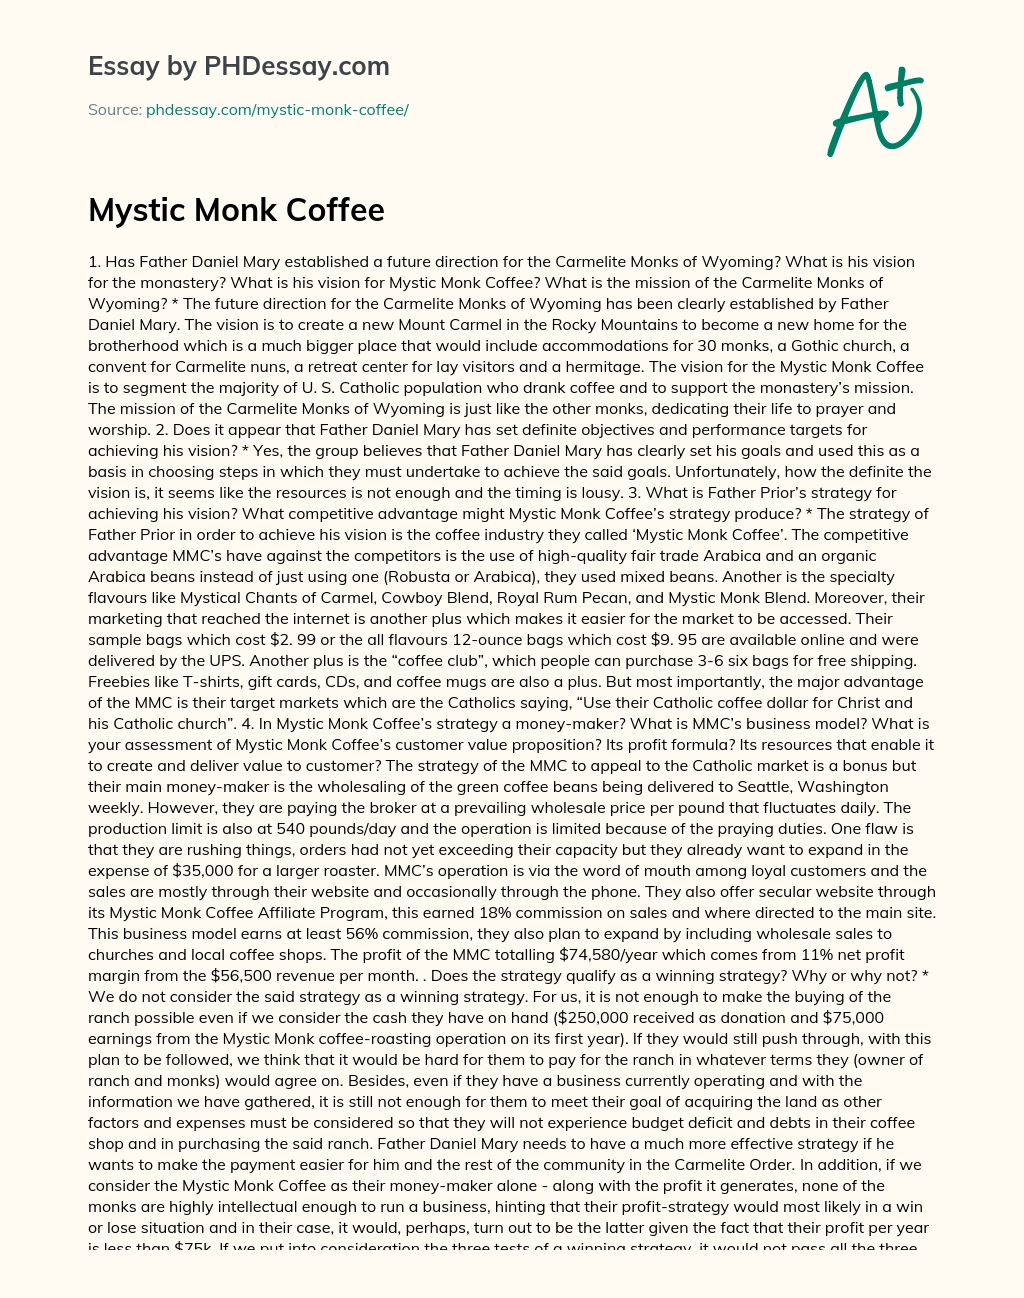 Mystic Monk Coffee essay